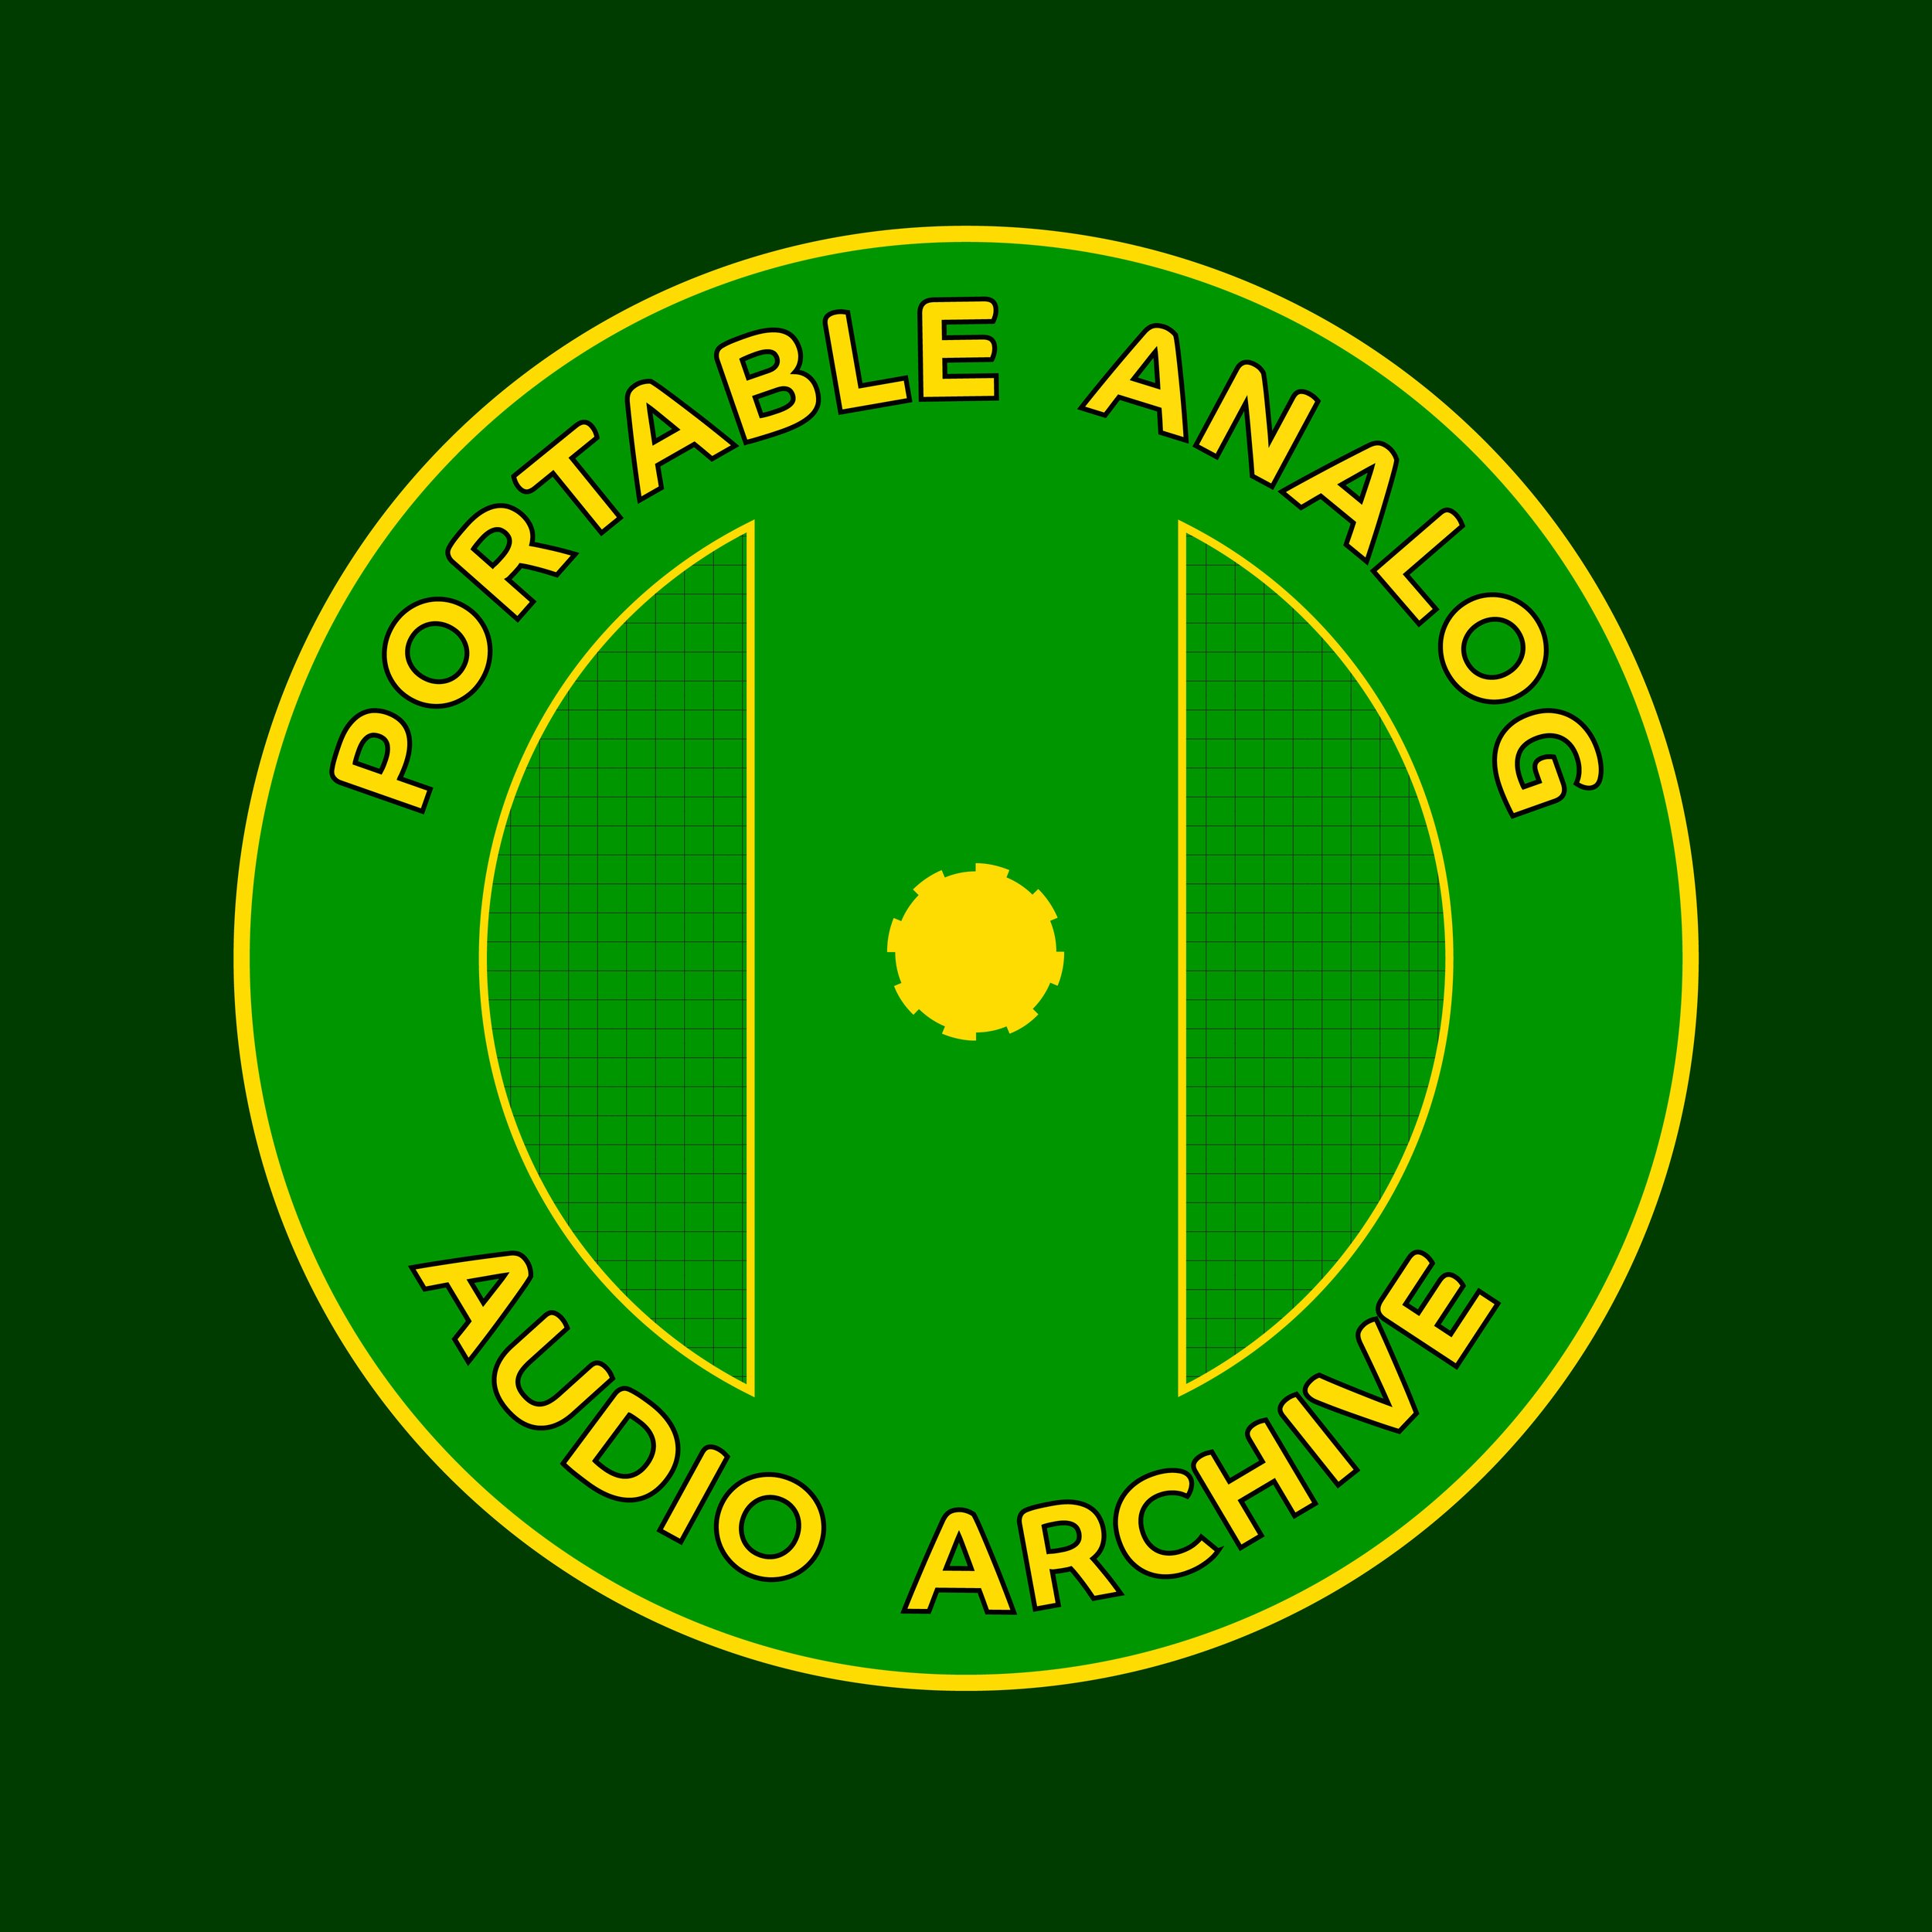 portable analog audio archive